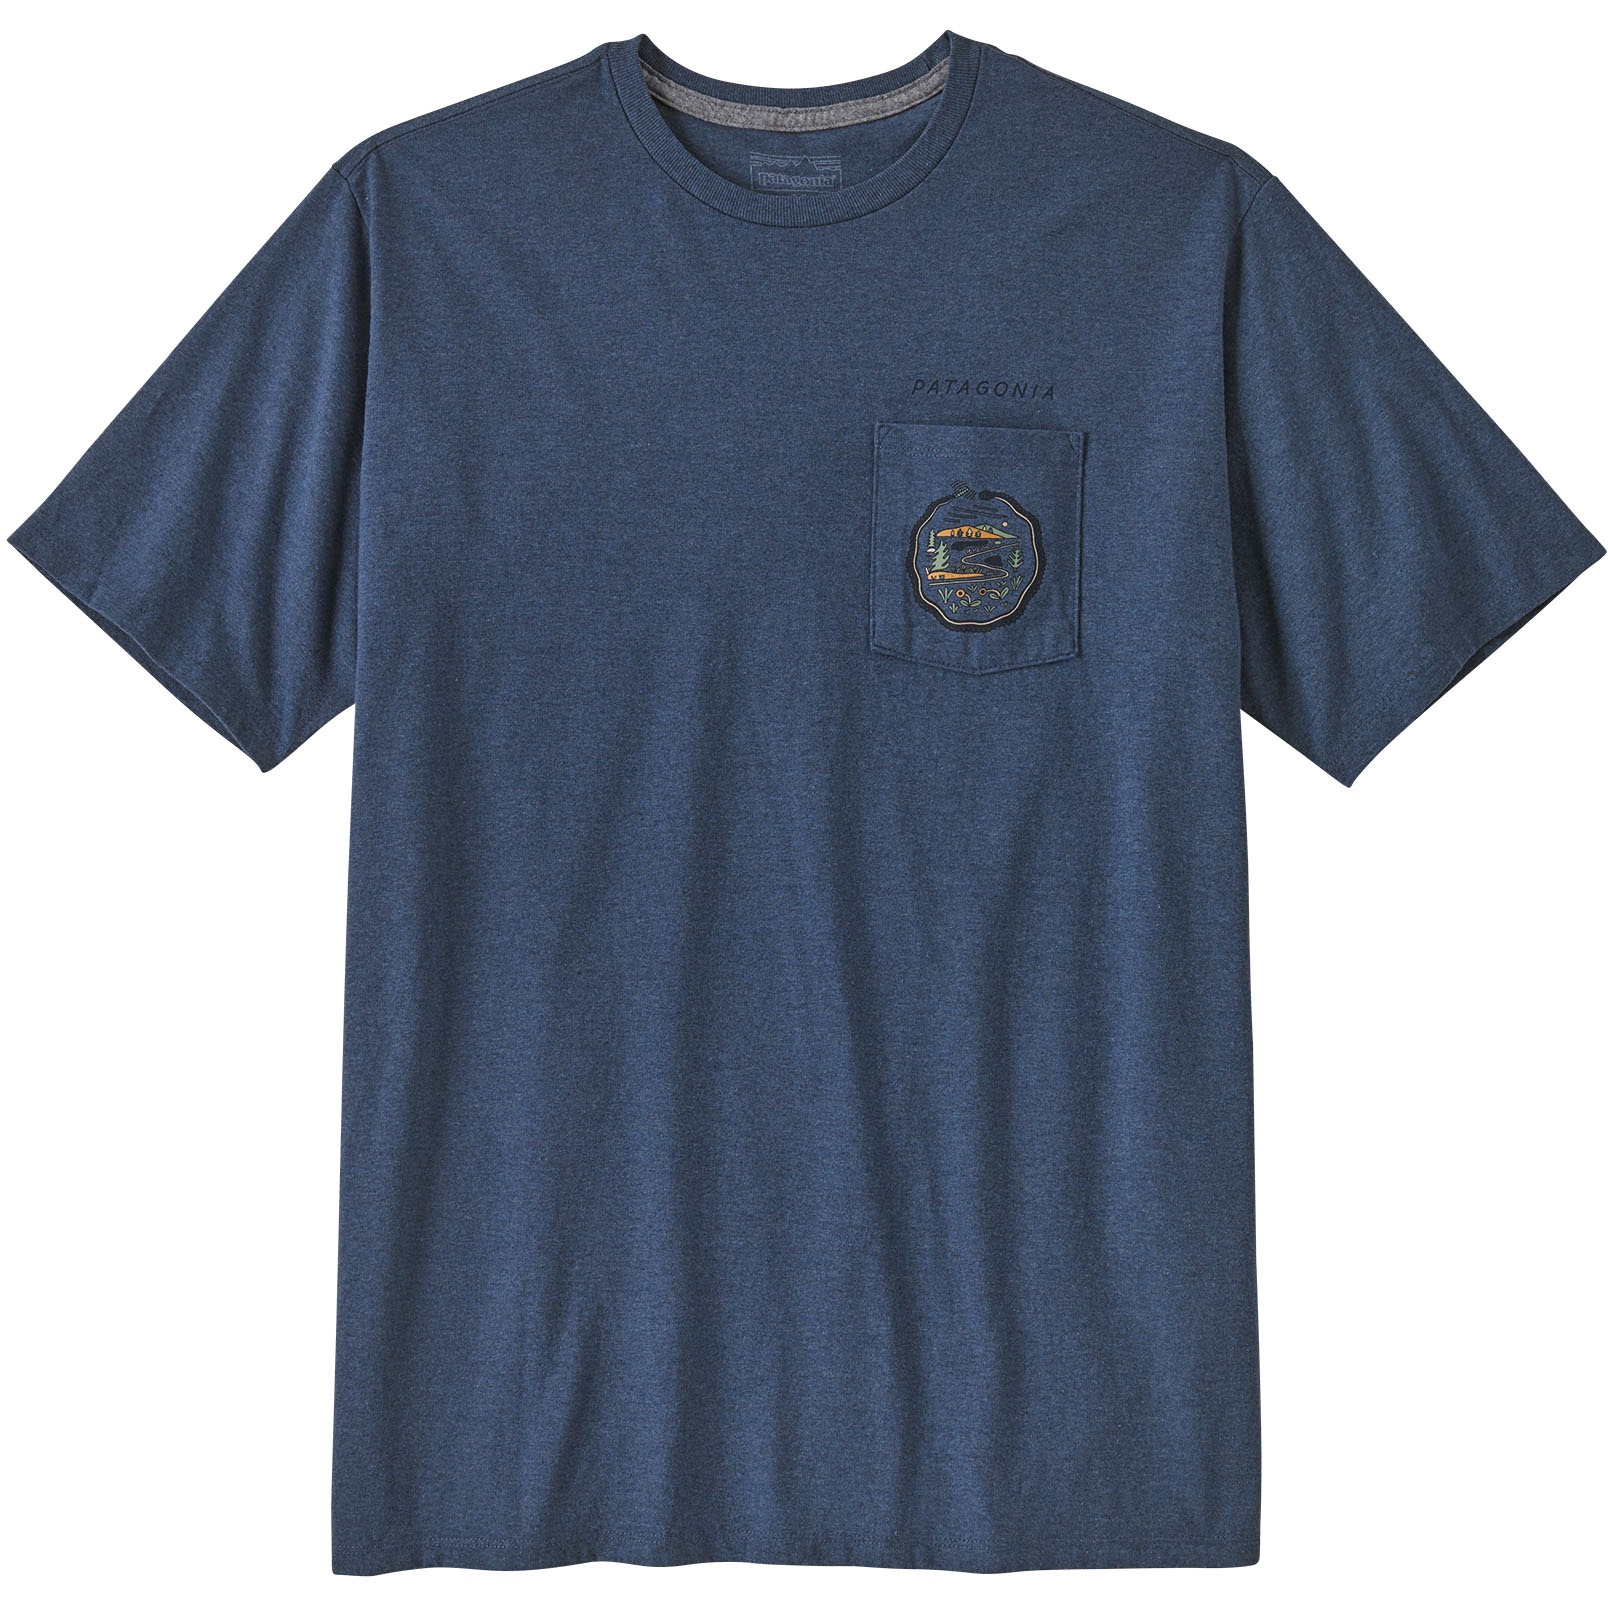 Produktbild von Patagonia Commontrail Pocket Responsibili-Tee T-Shirt Herren - Utility Blue